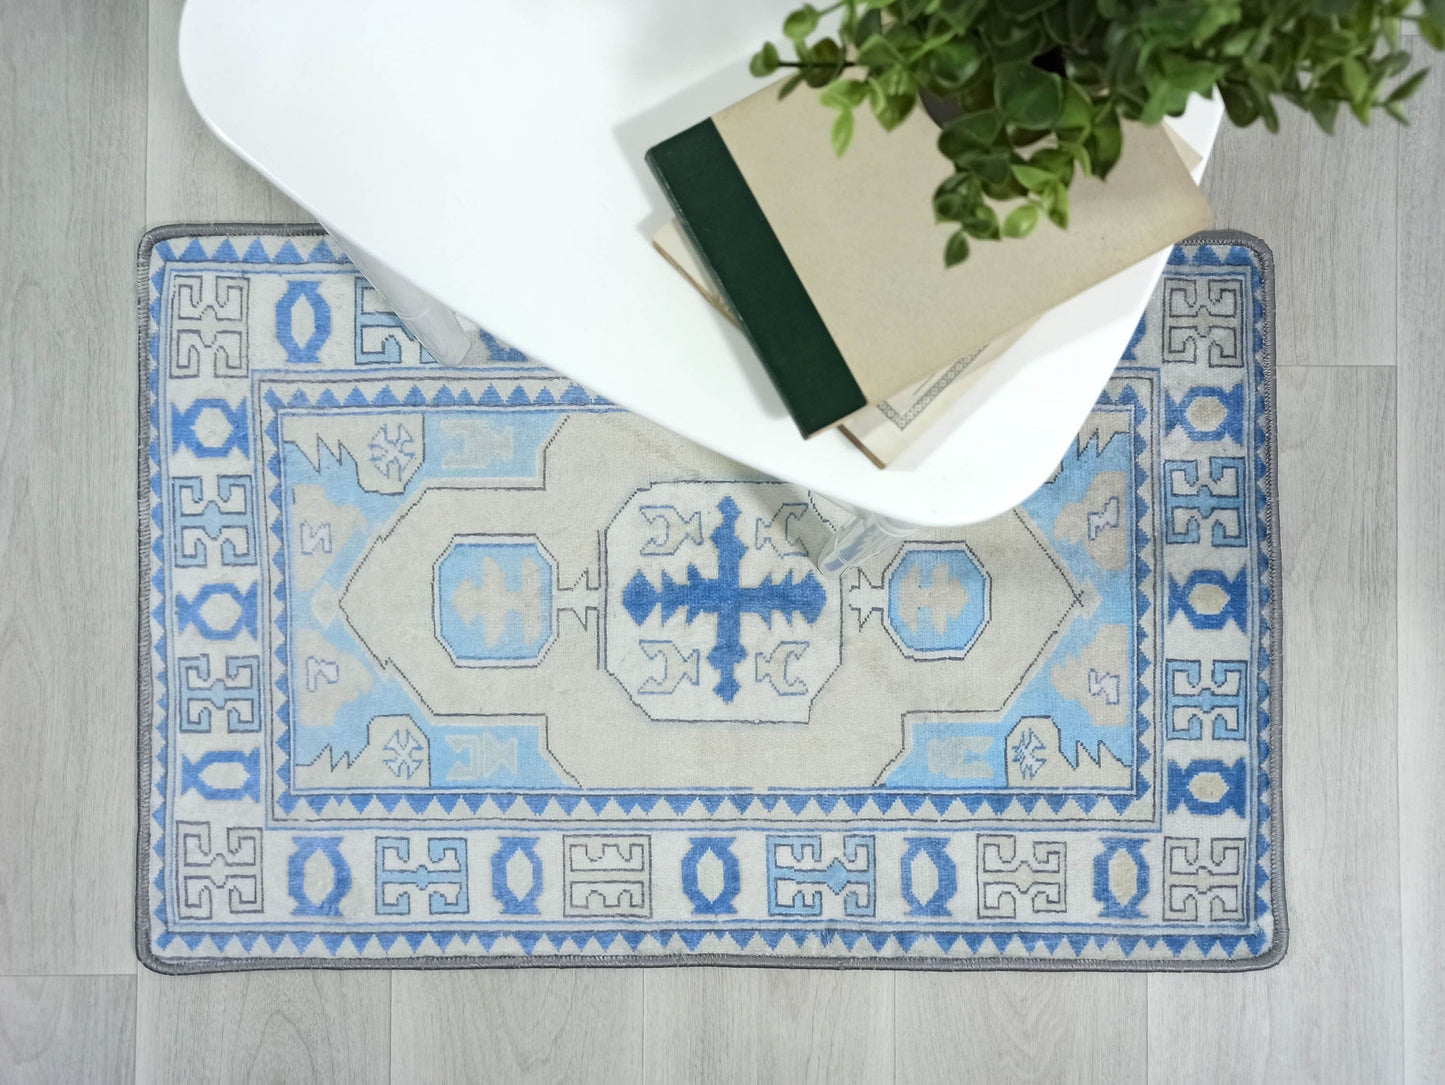 2x3 Turkish Rug, Blue Vintage Geometric Traditional Oushak Entryway Door Floor Mat Safe Anti slip Bath Bathroom Kitchen Bedside Doormat Rugs - famerugs